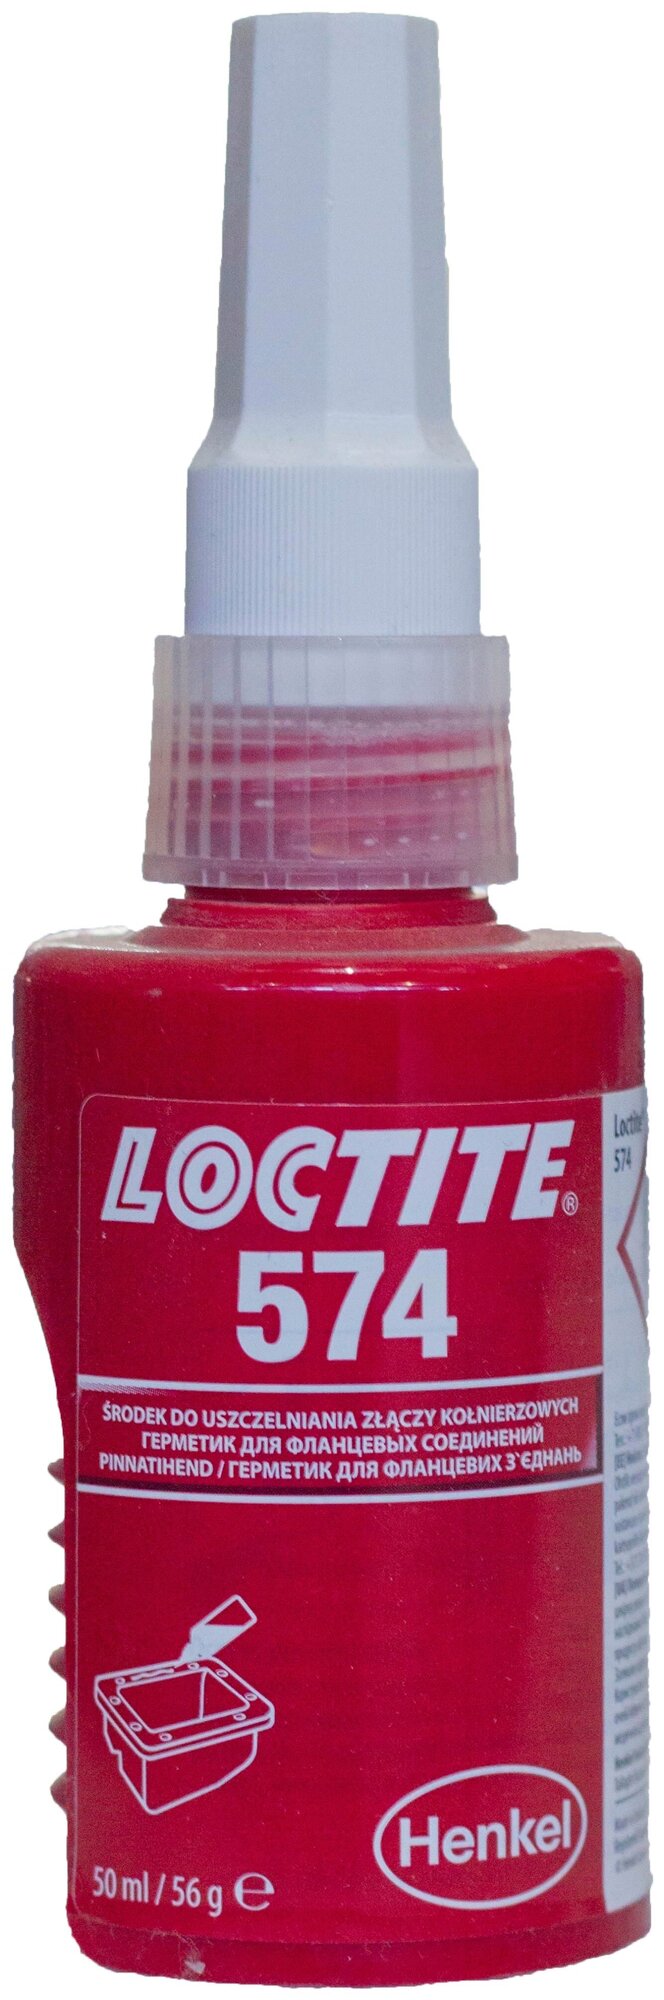 LOCTITE 574 фланцевый анаэробный герметик 50мл